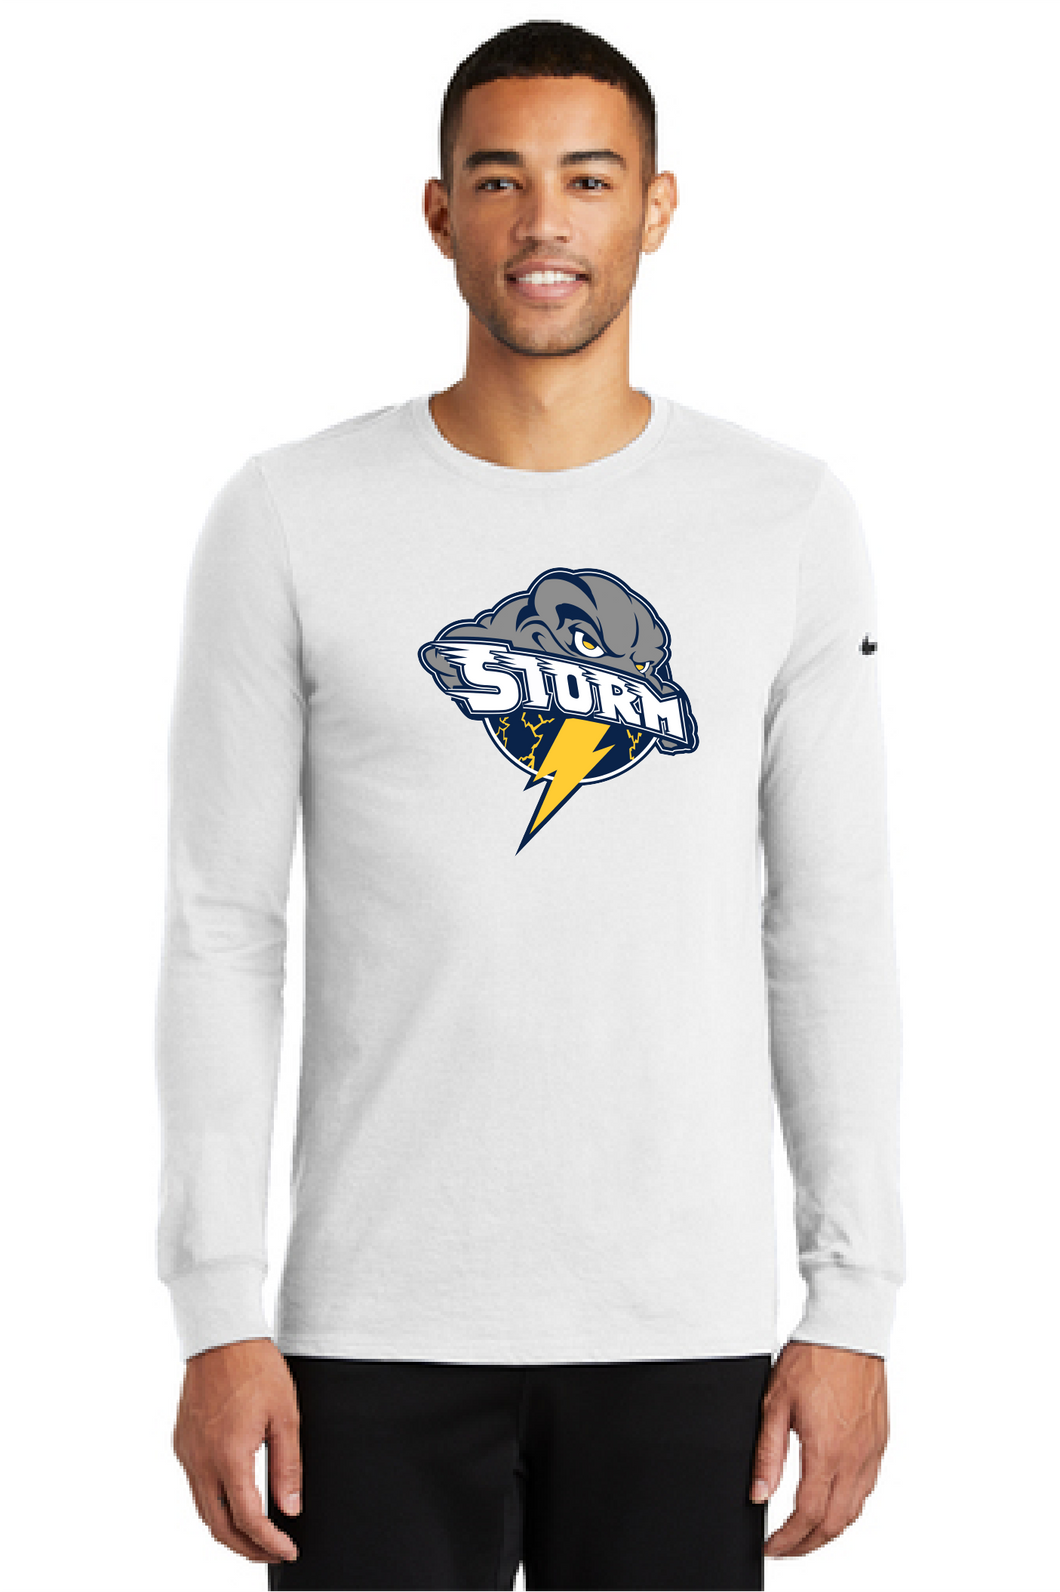 Storm Nike Long Sleeve T-shirt